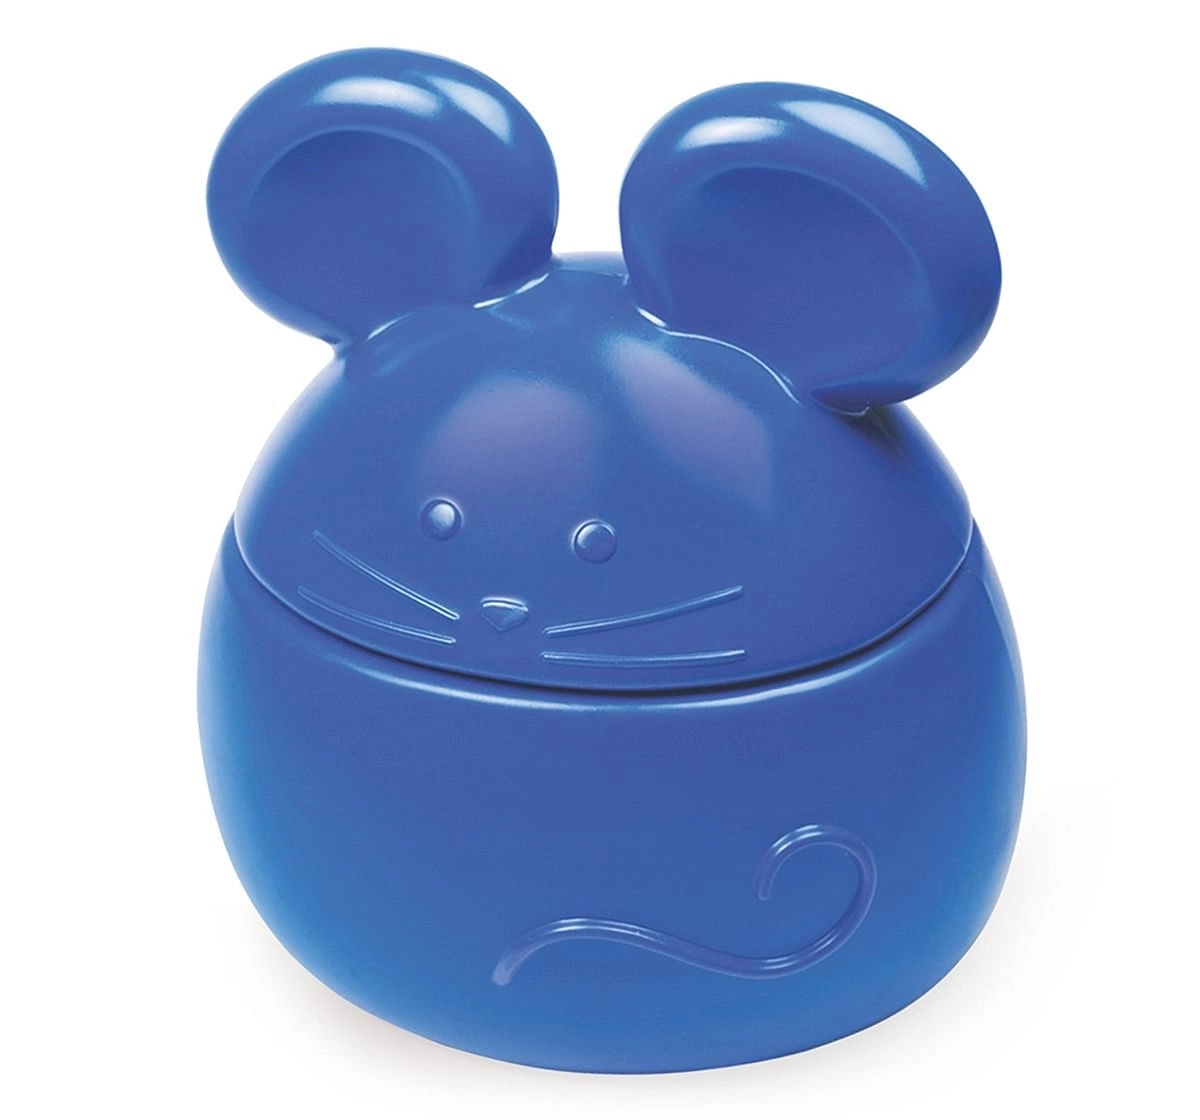 Ok Play My Mickey Bin Toy storage box Blue 3Y+